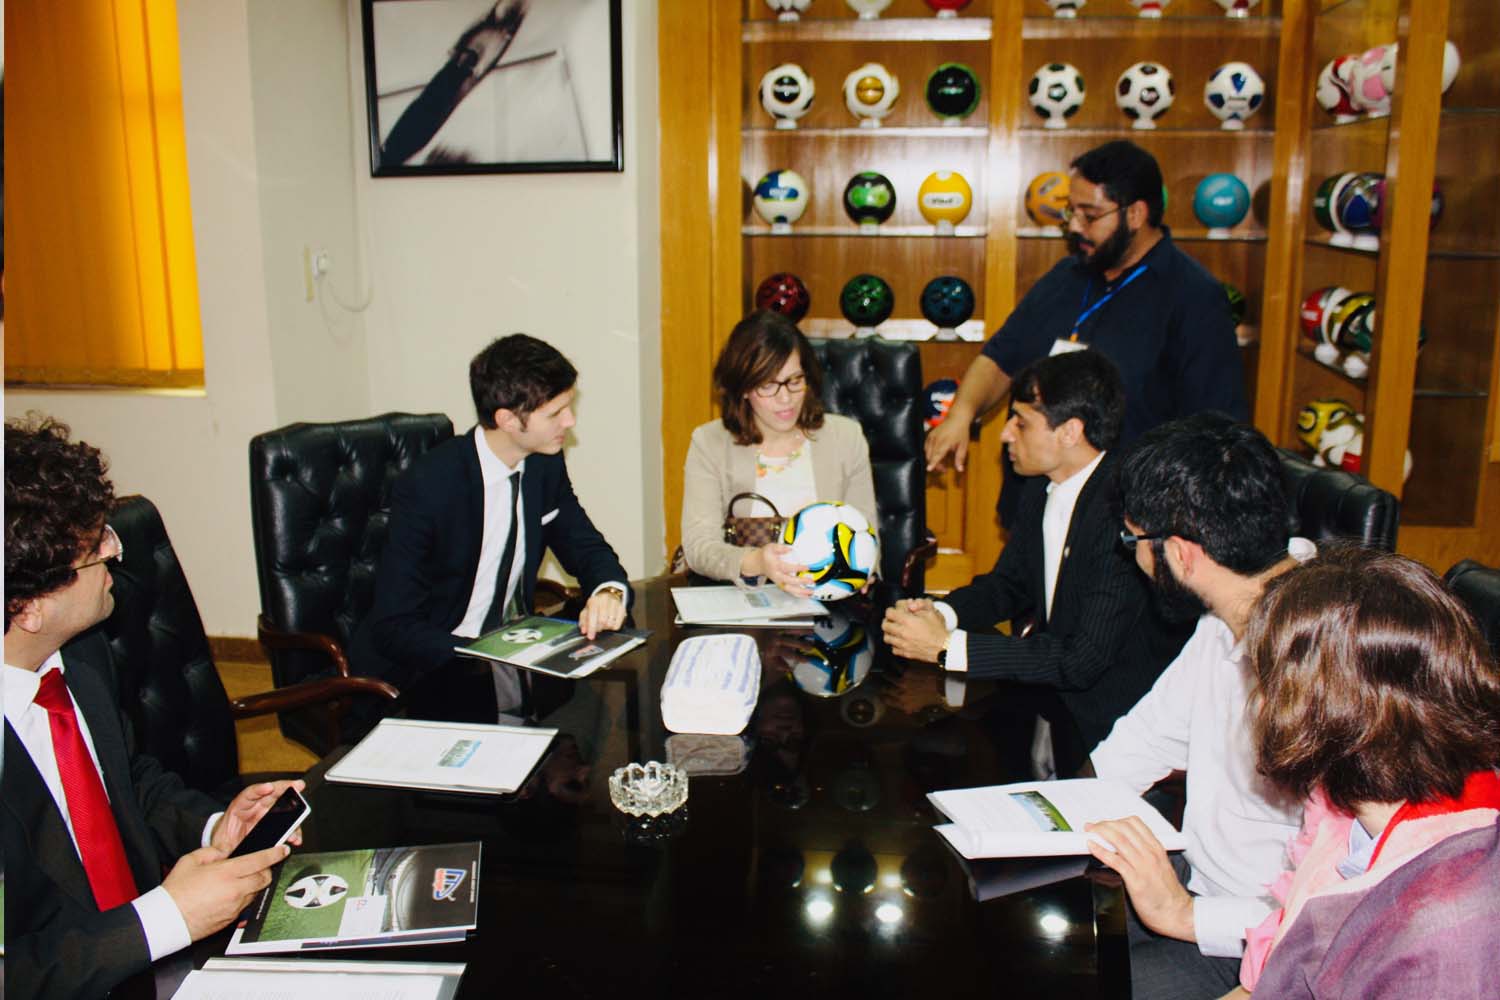 Delegation from Embassy of Brazil visited us on 09 October 2013.